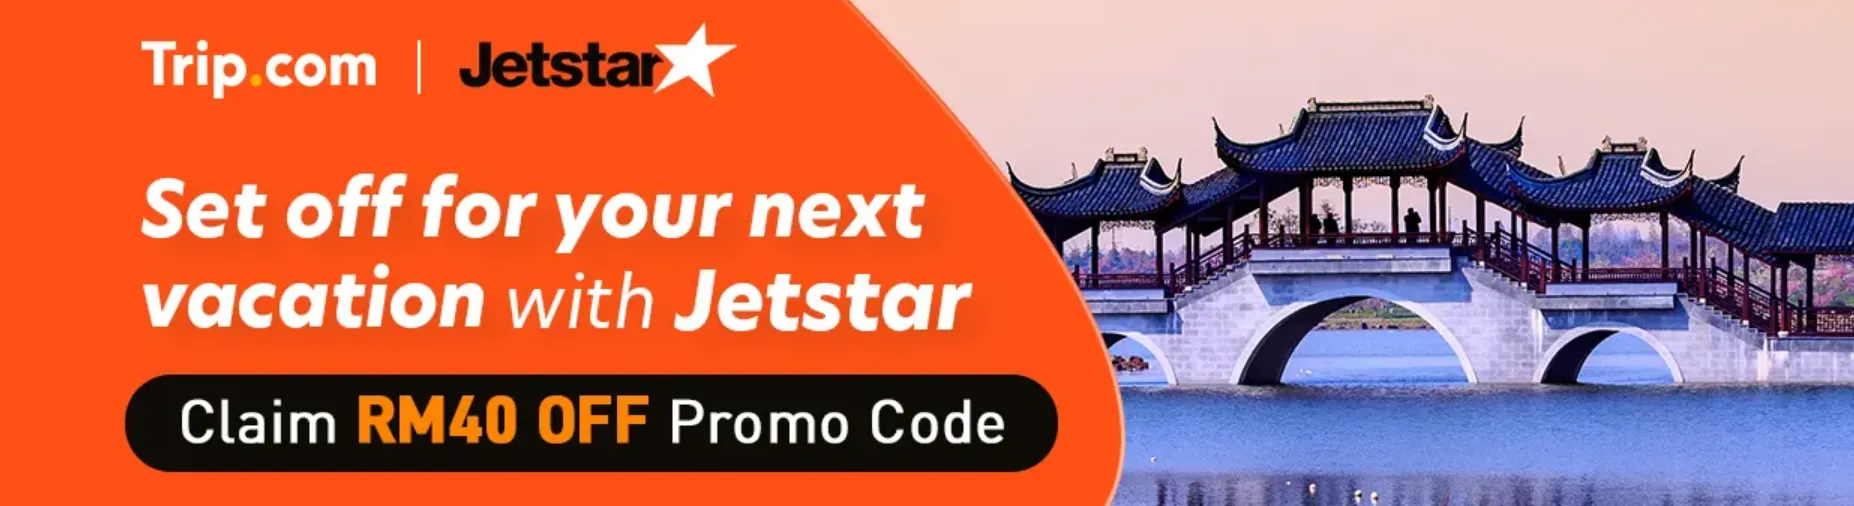 Trip.com Promo Code Malaysia: Fly with Jetstar